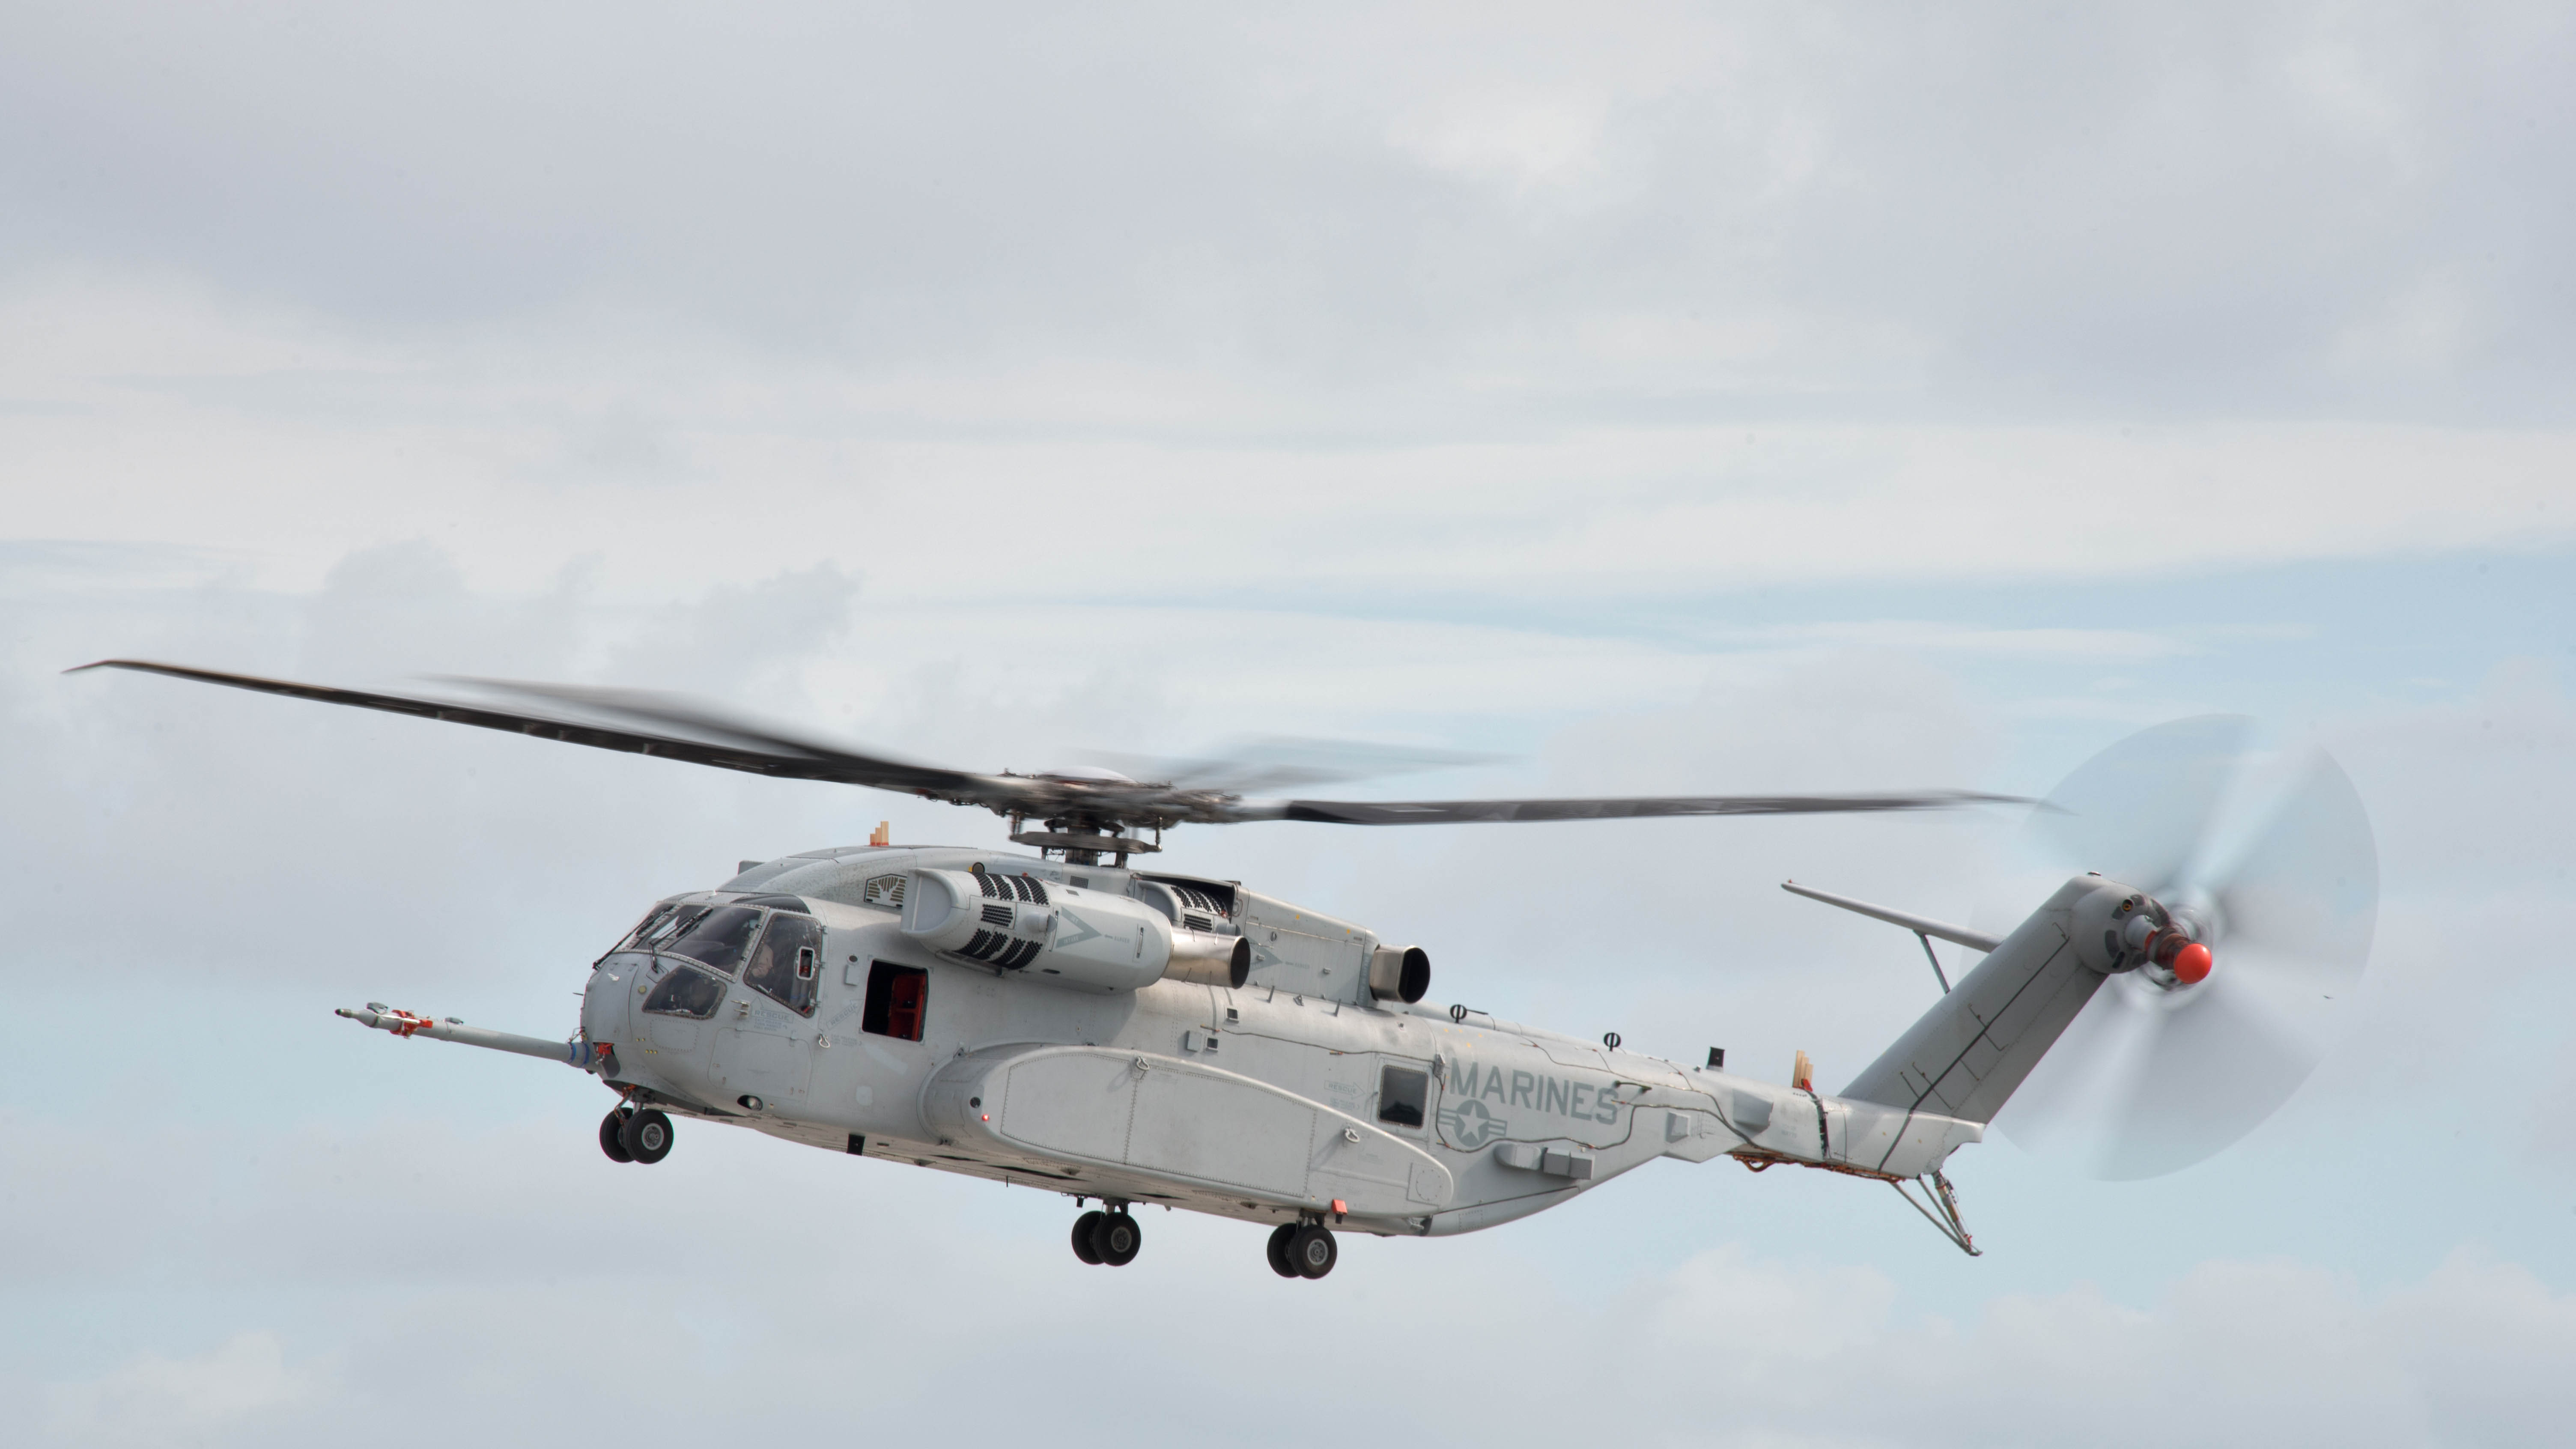 Sikorsky CH-53K King Stallion Backgrounds on Wallpapers Vista